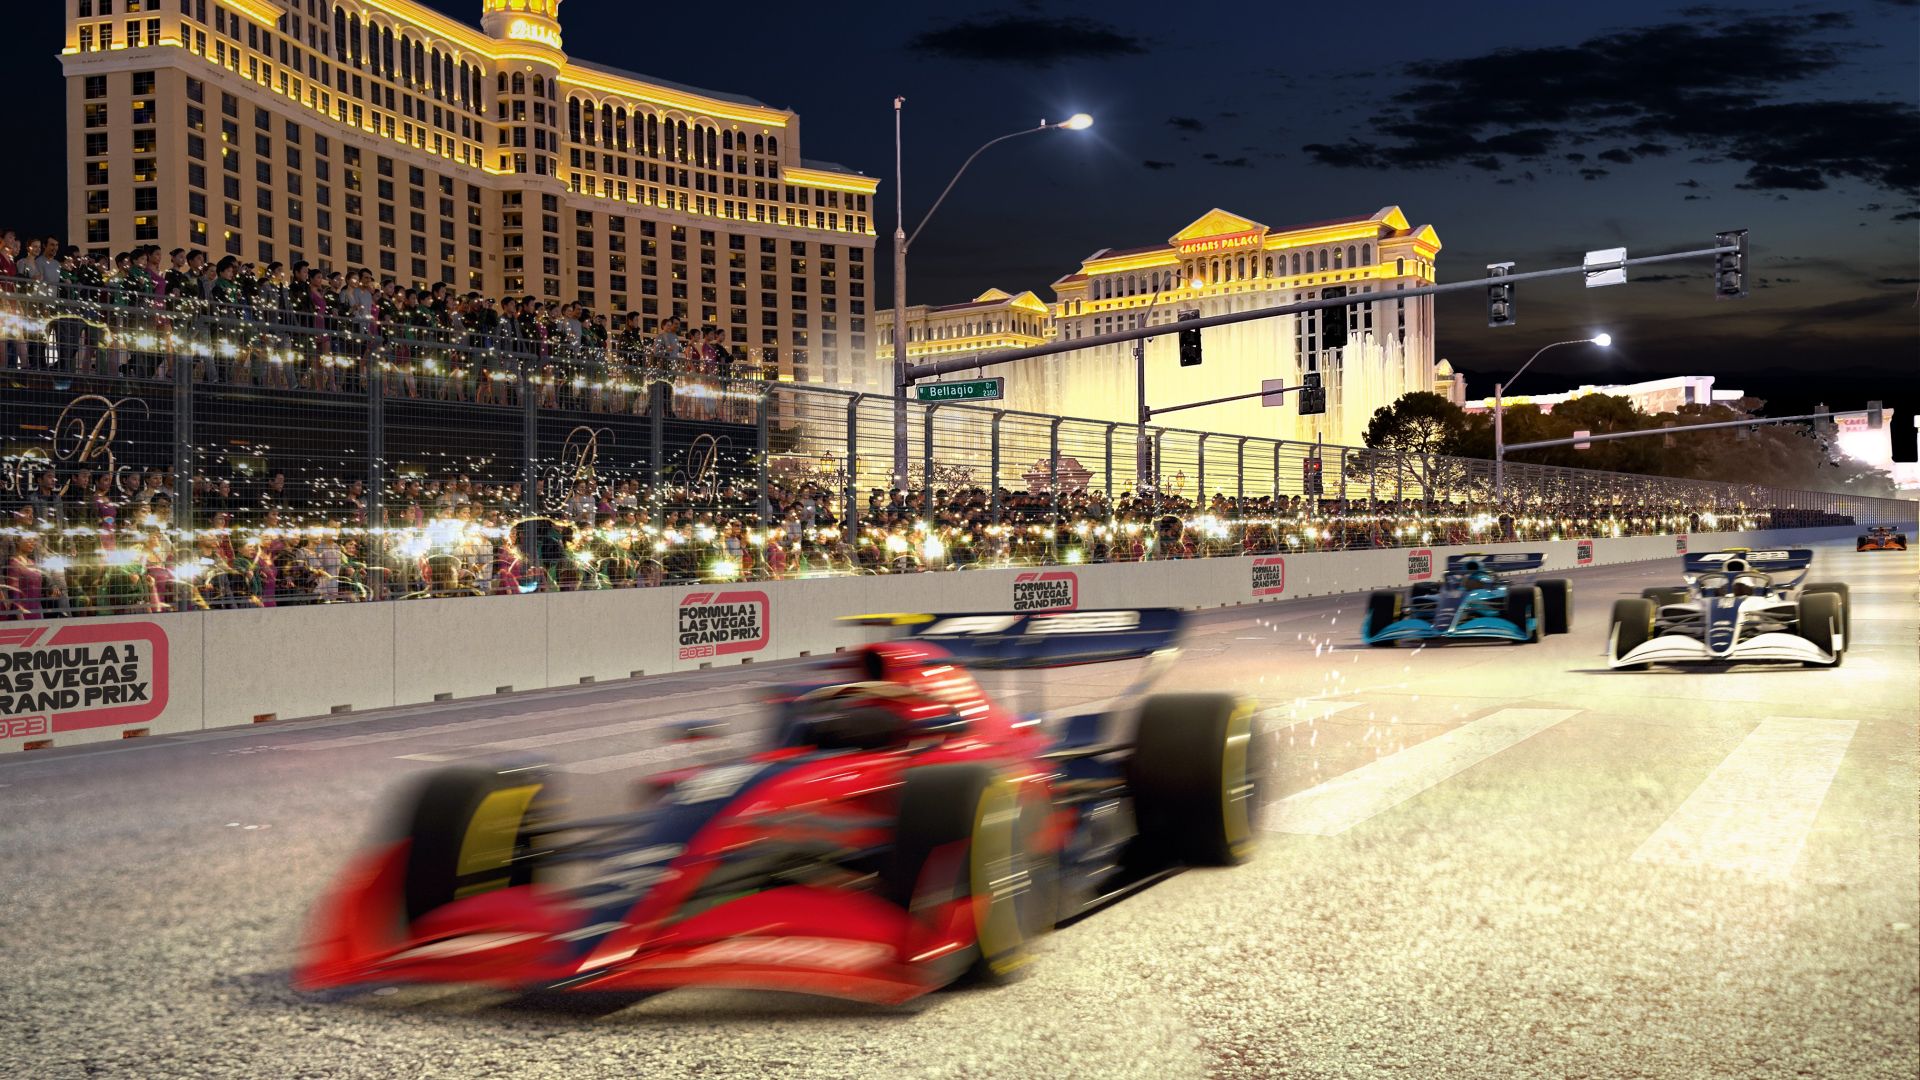 ​Las Vegas Grand Prix [Click and drag to move] ​